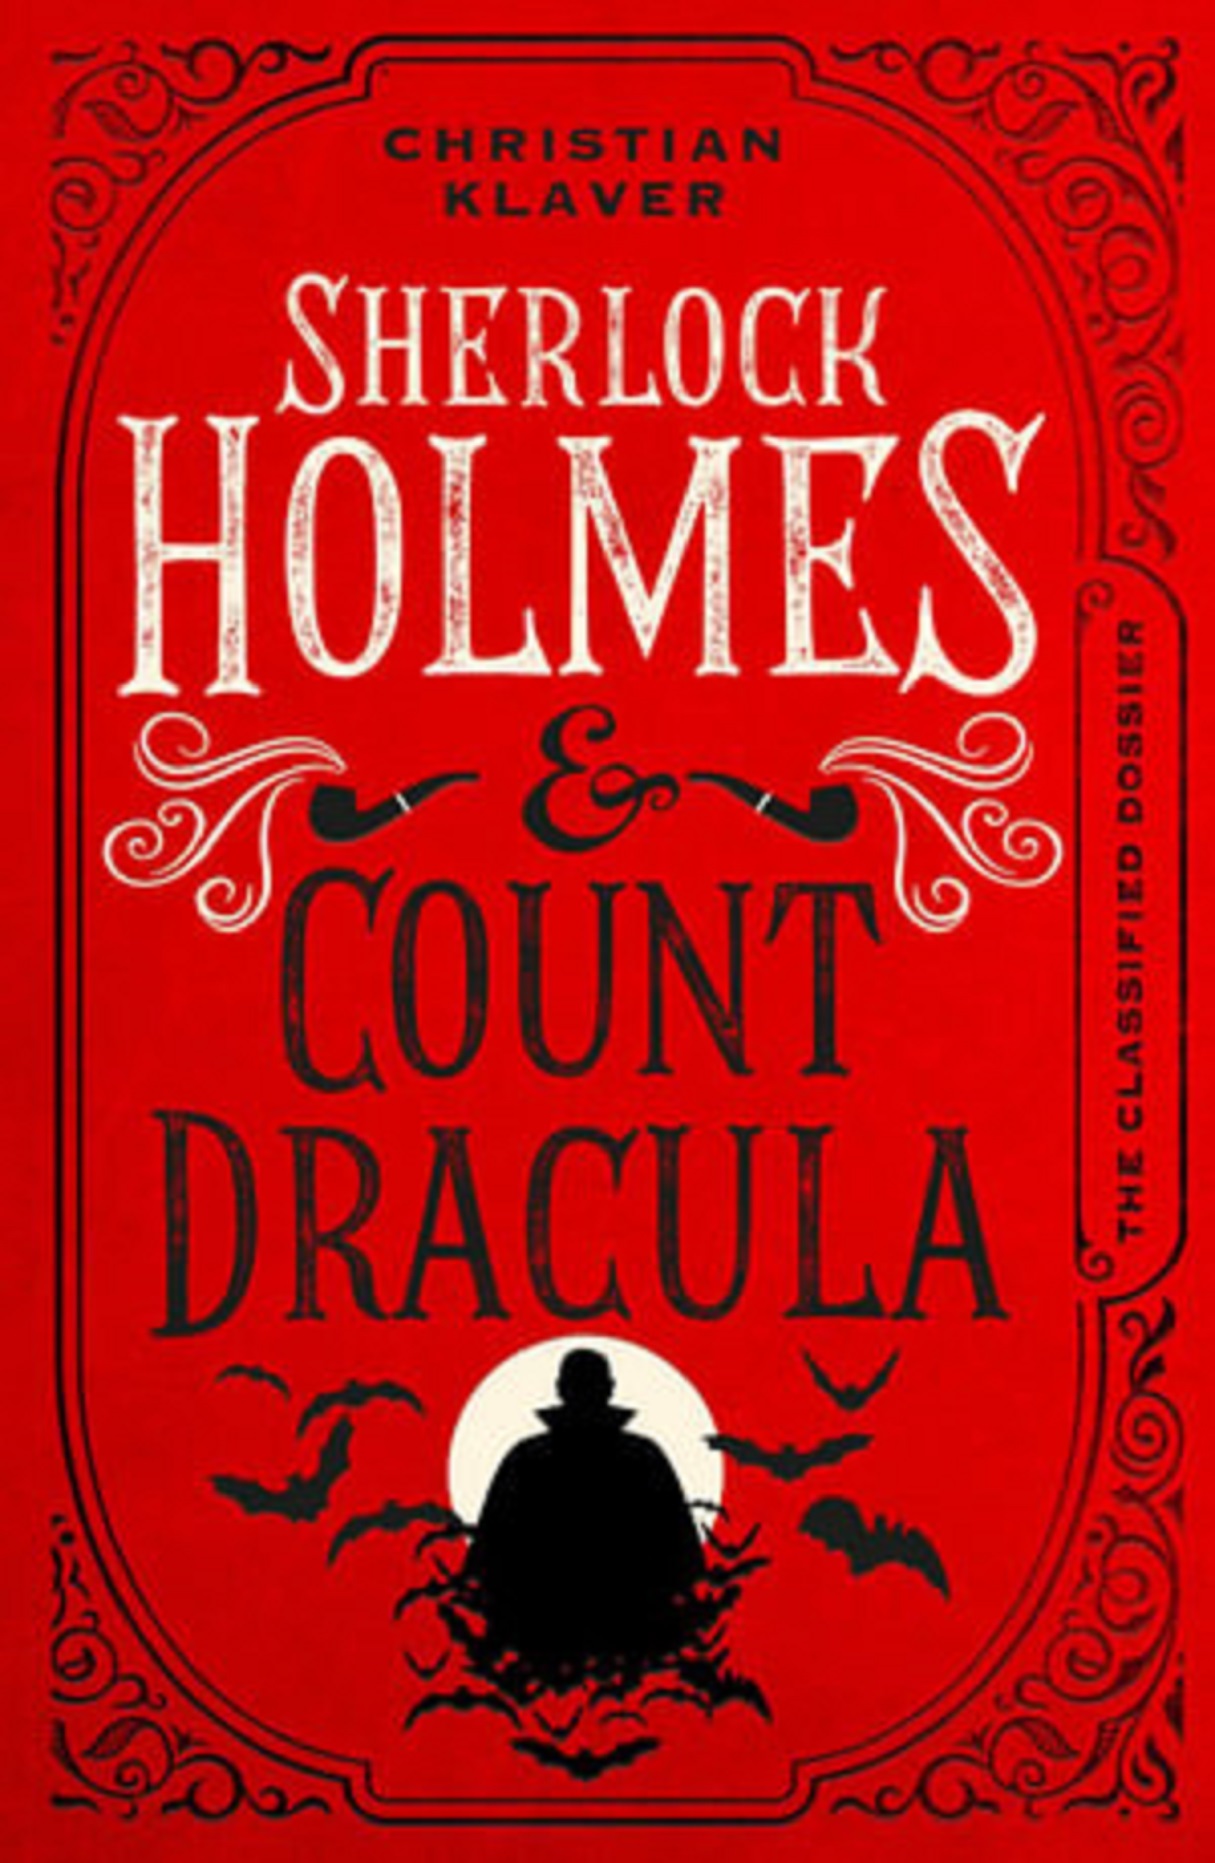 Sherlock Holmes and Count Dracula | Christian Klaver